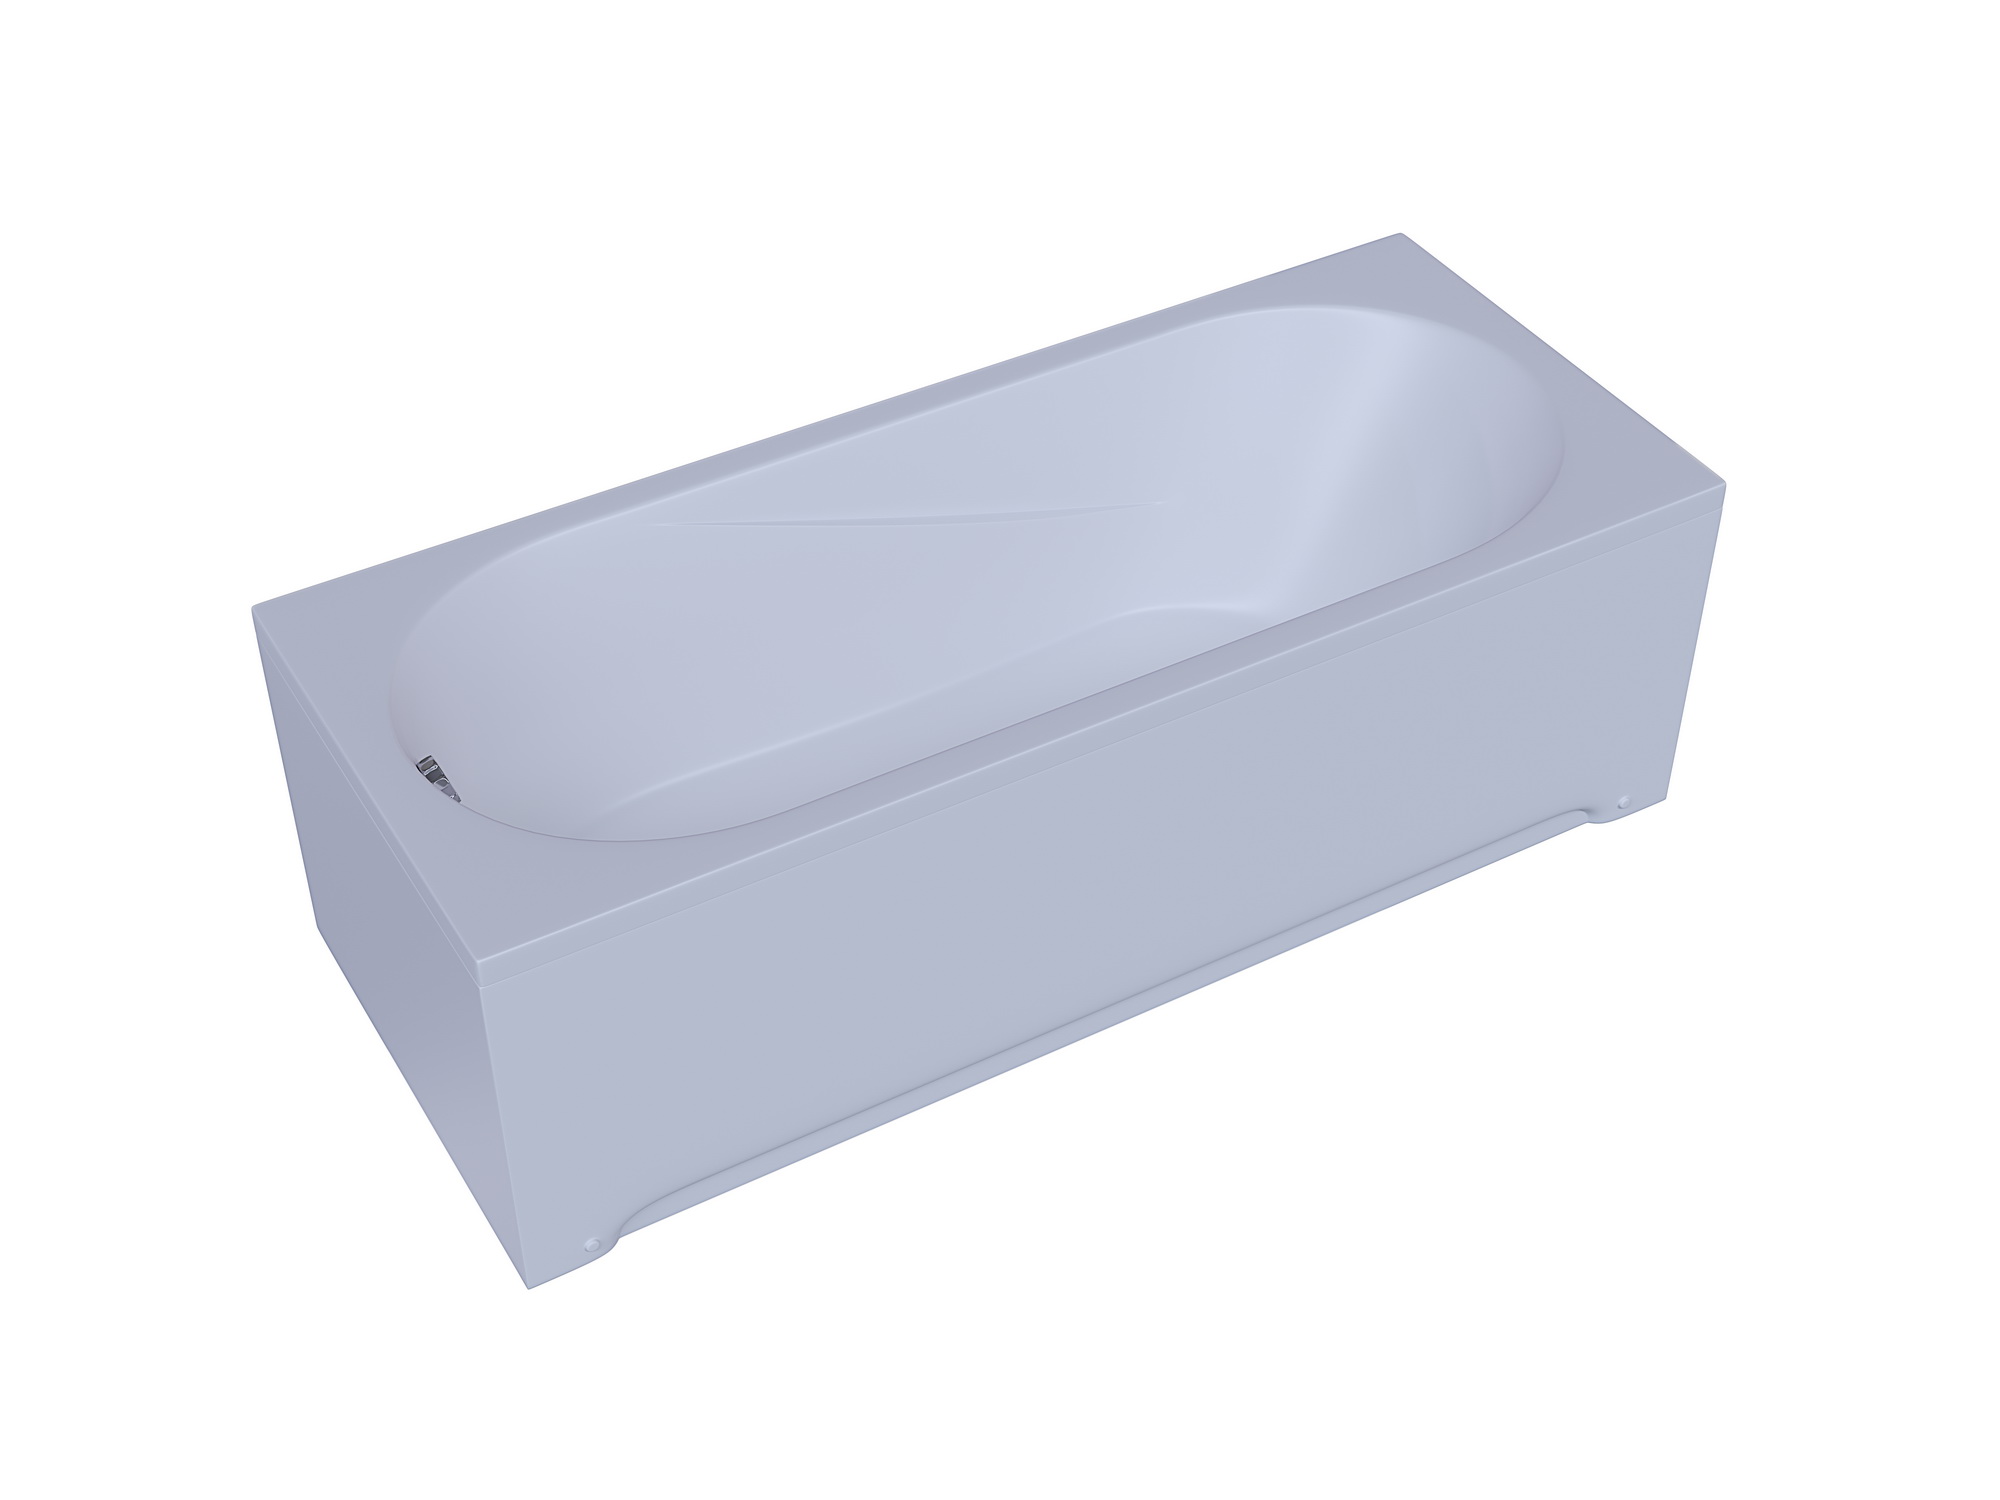 Акриловая ванна Aquatek Lifestyle Либерти 160x70 BER160-0000001 без гидромассажа, белая, размер 160x70, цвет белый - фото 2